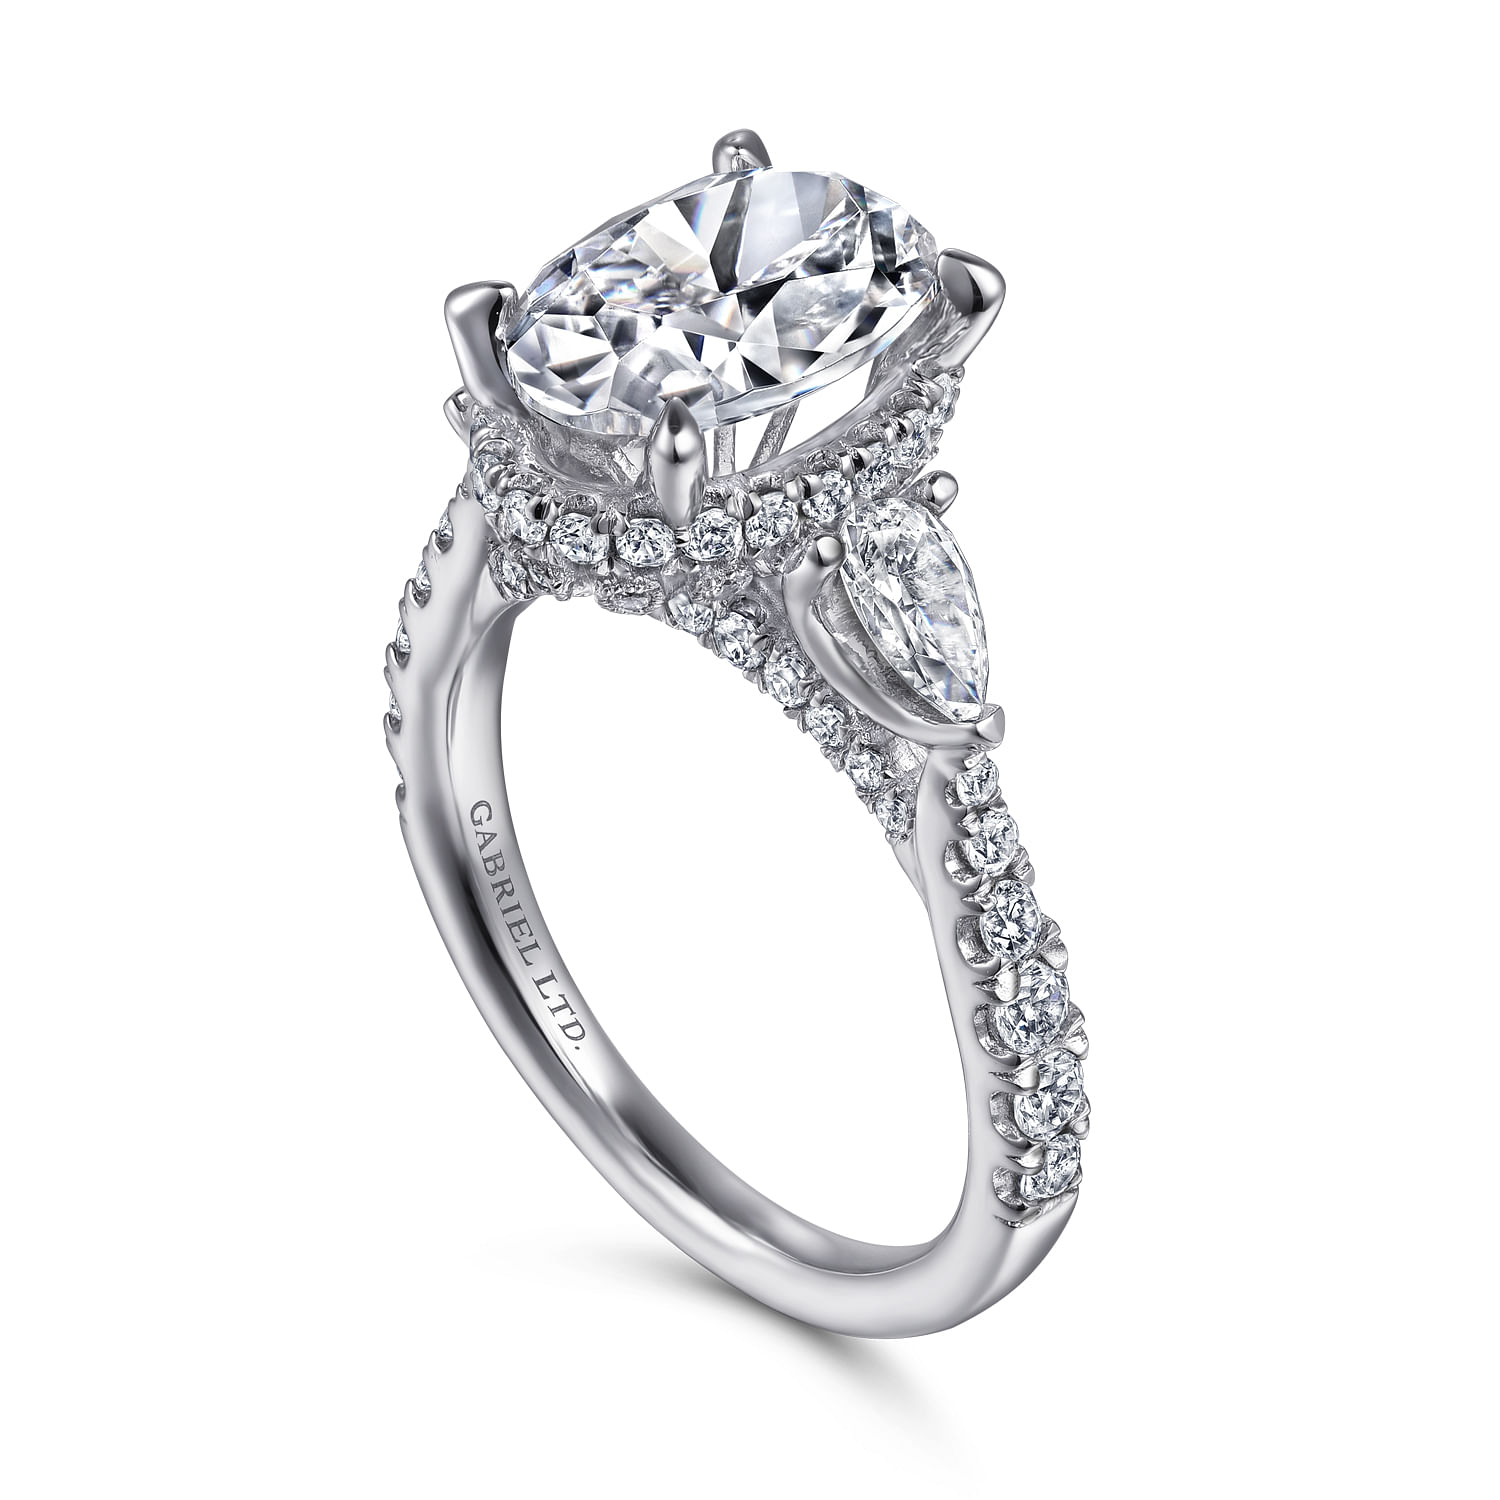 Vintage Inspired 18K White Gold Oval Three Stone Diamond Engagement Ring